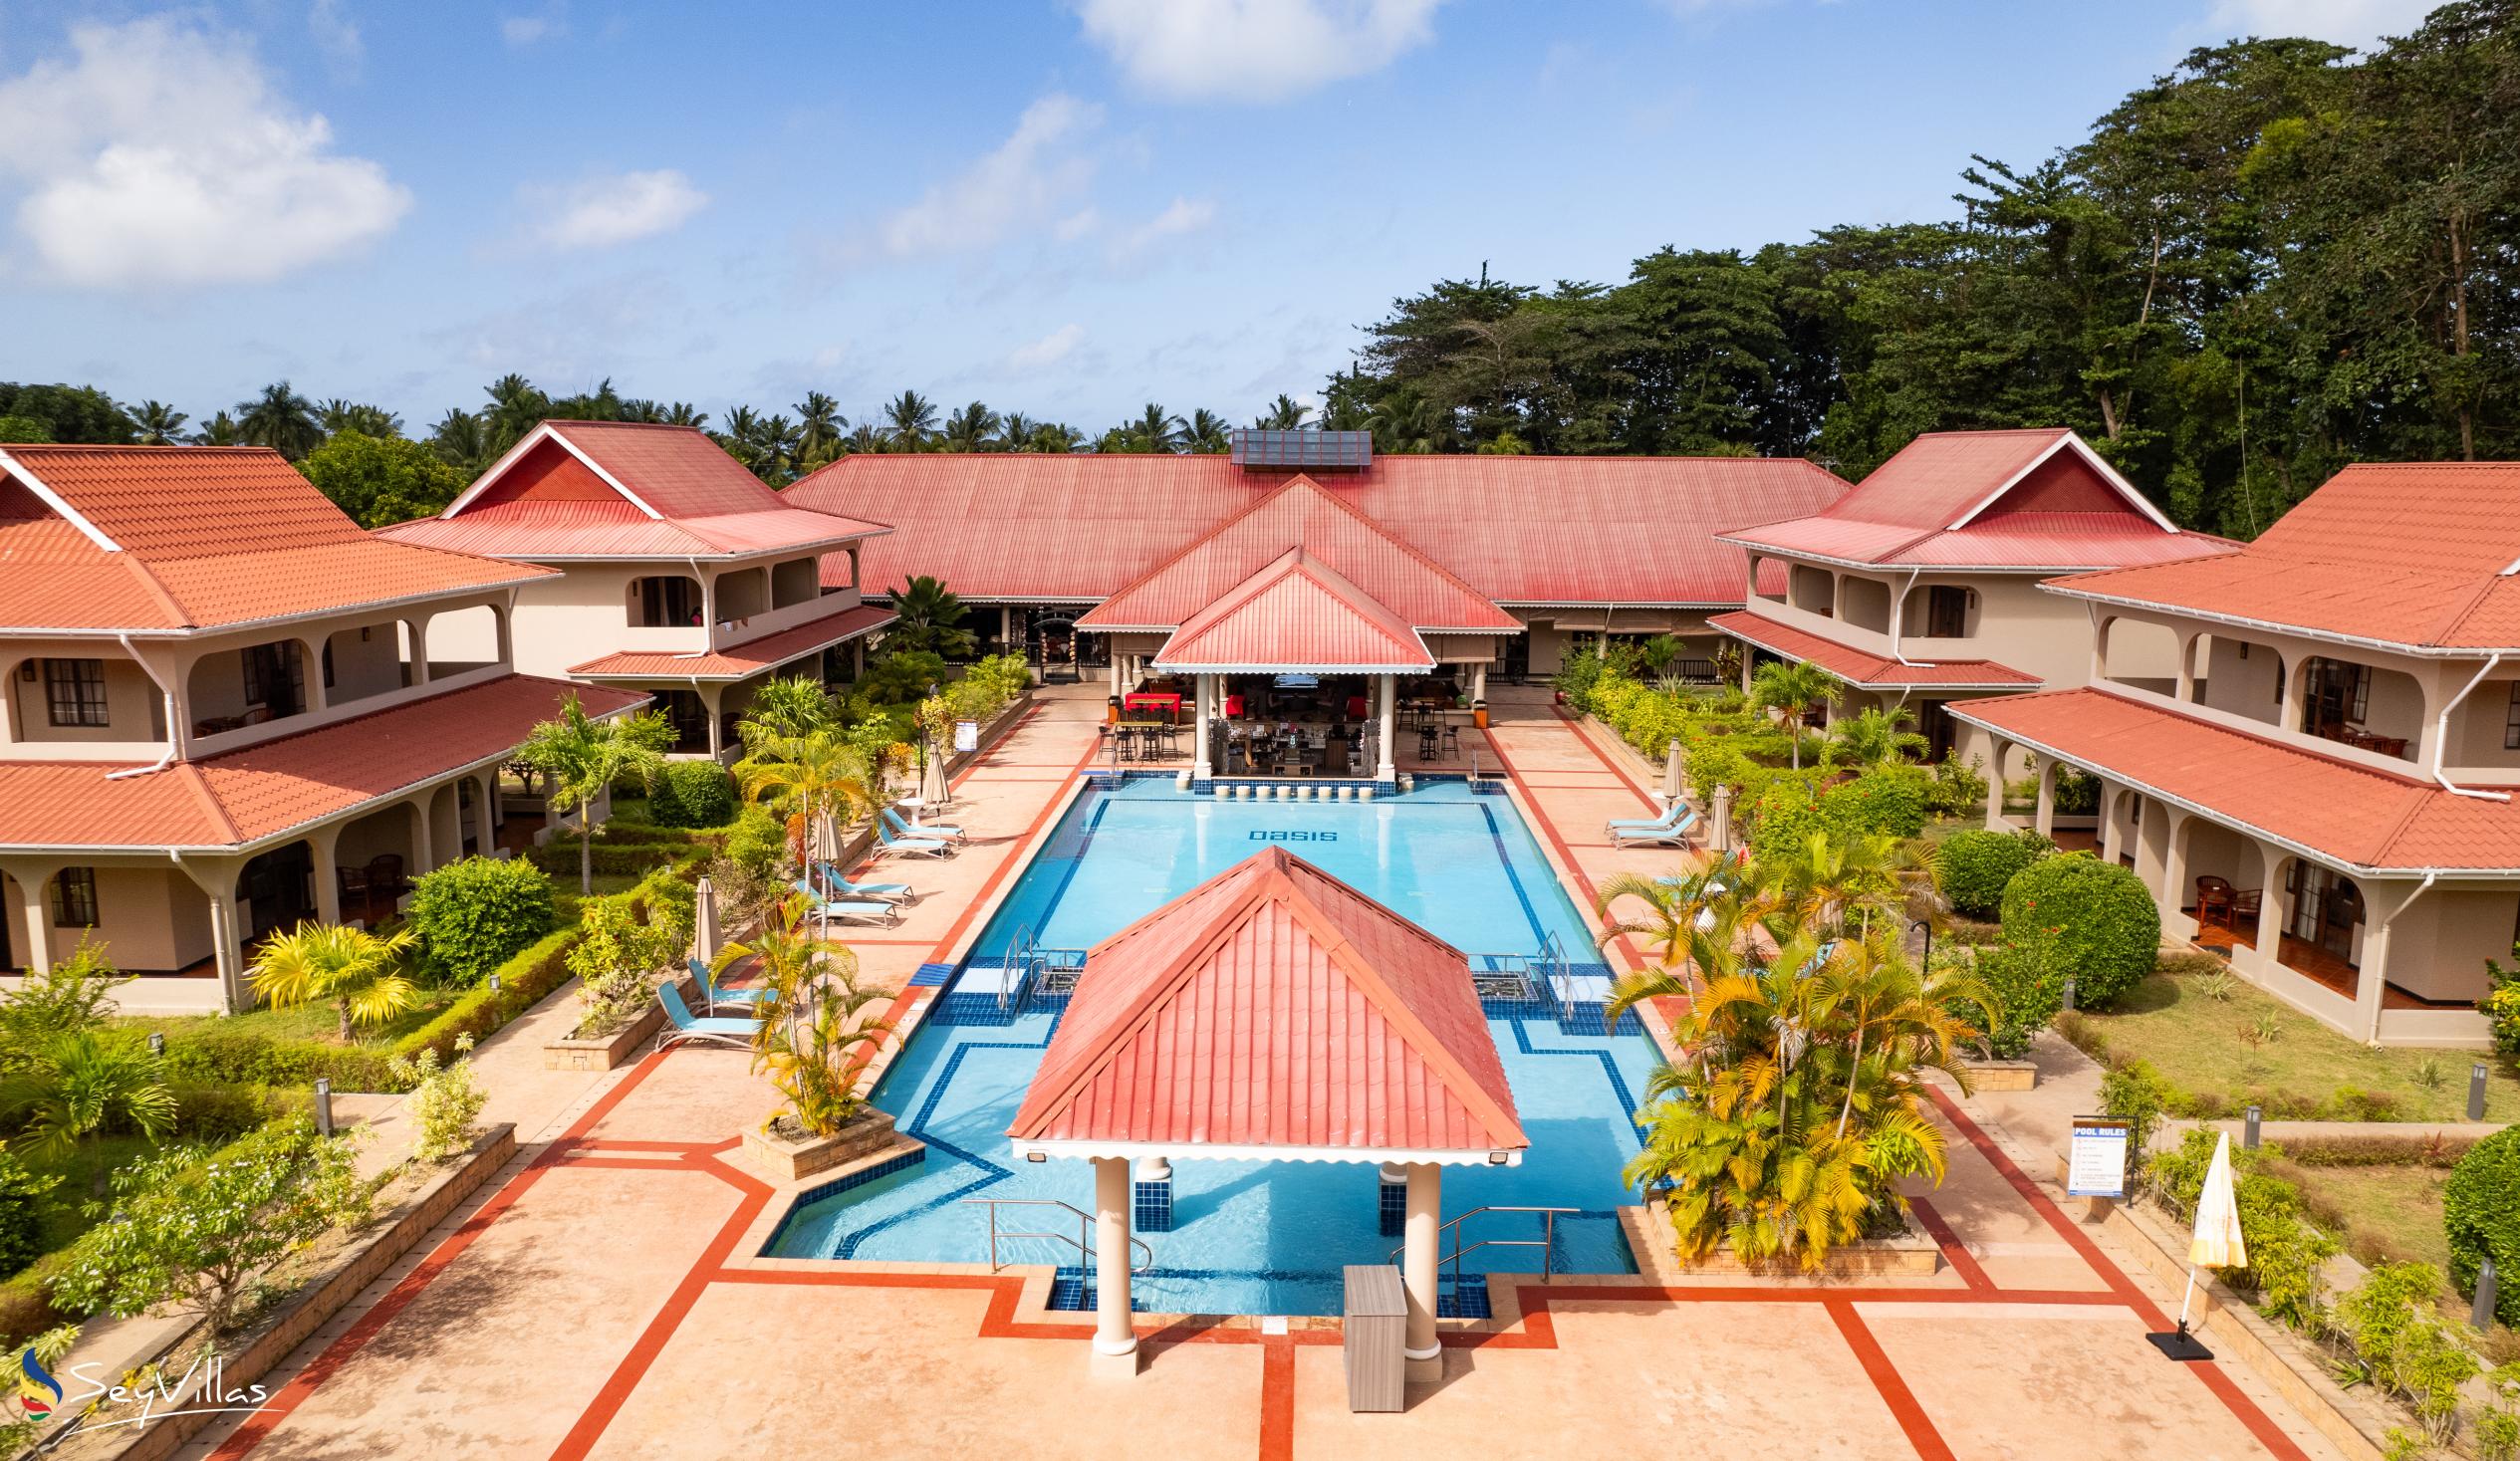 Photo 7: Oasis Hotel, Restaurant & Spa - Outdoor area - Praslin (Seychelles)